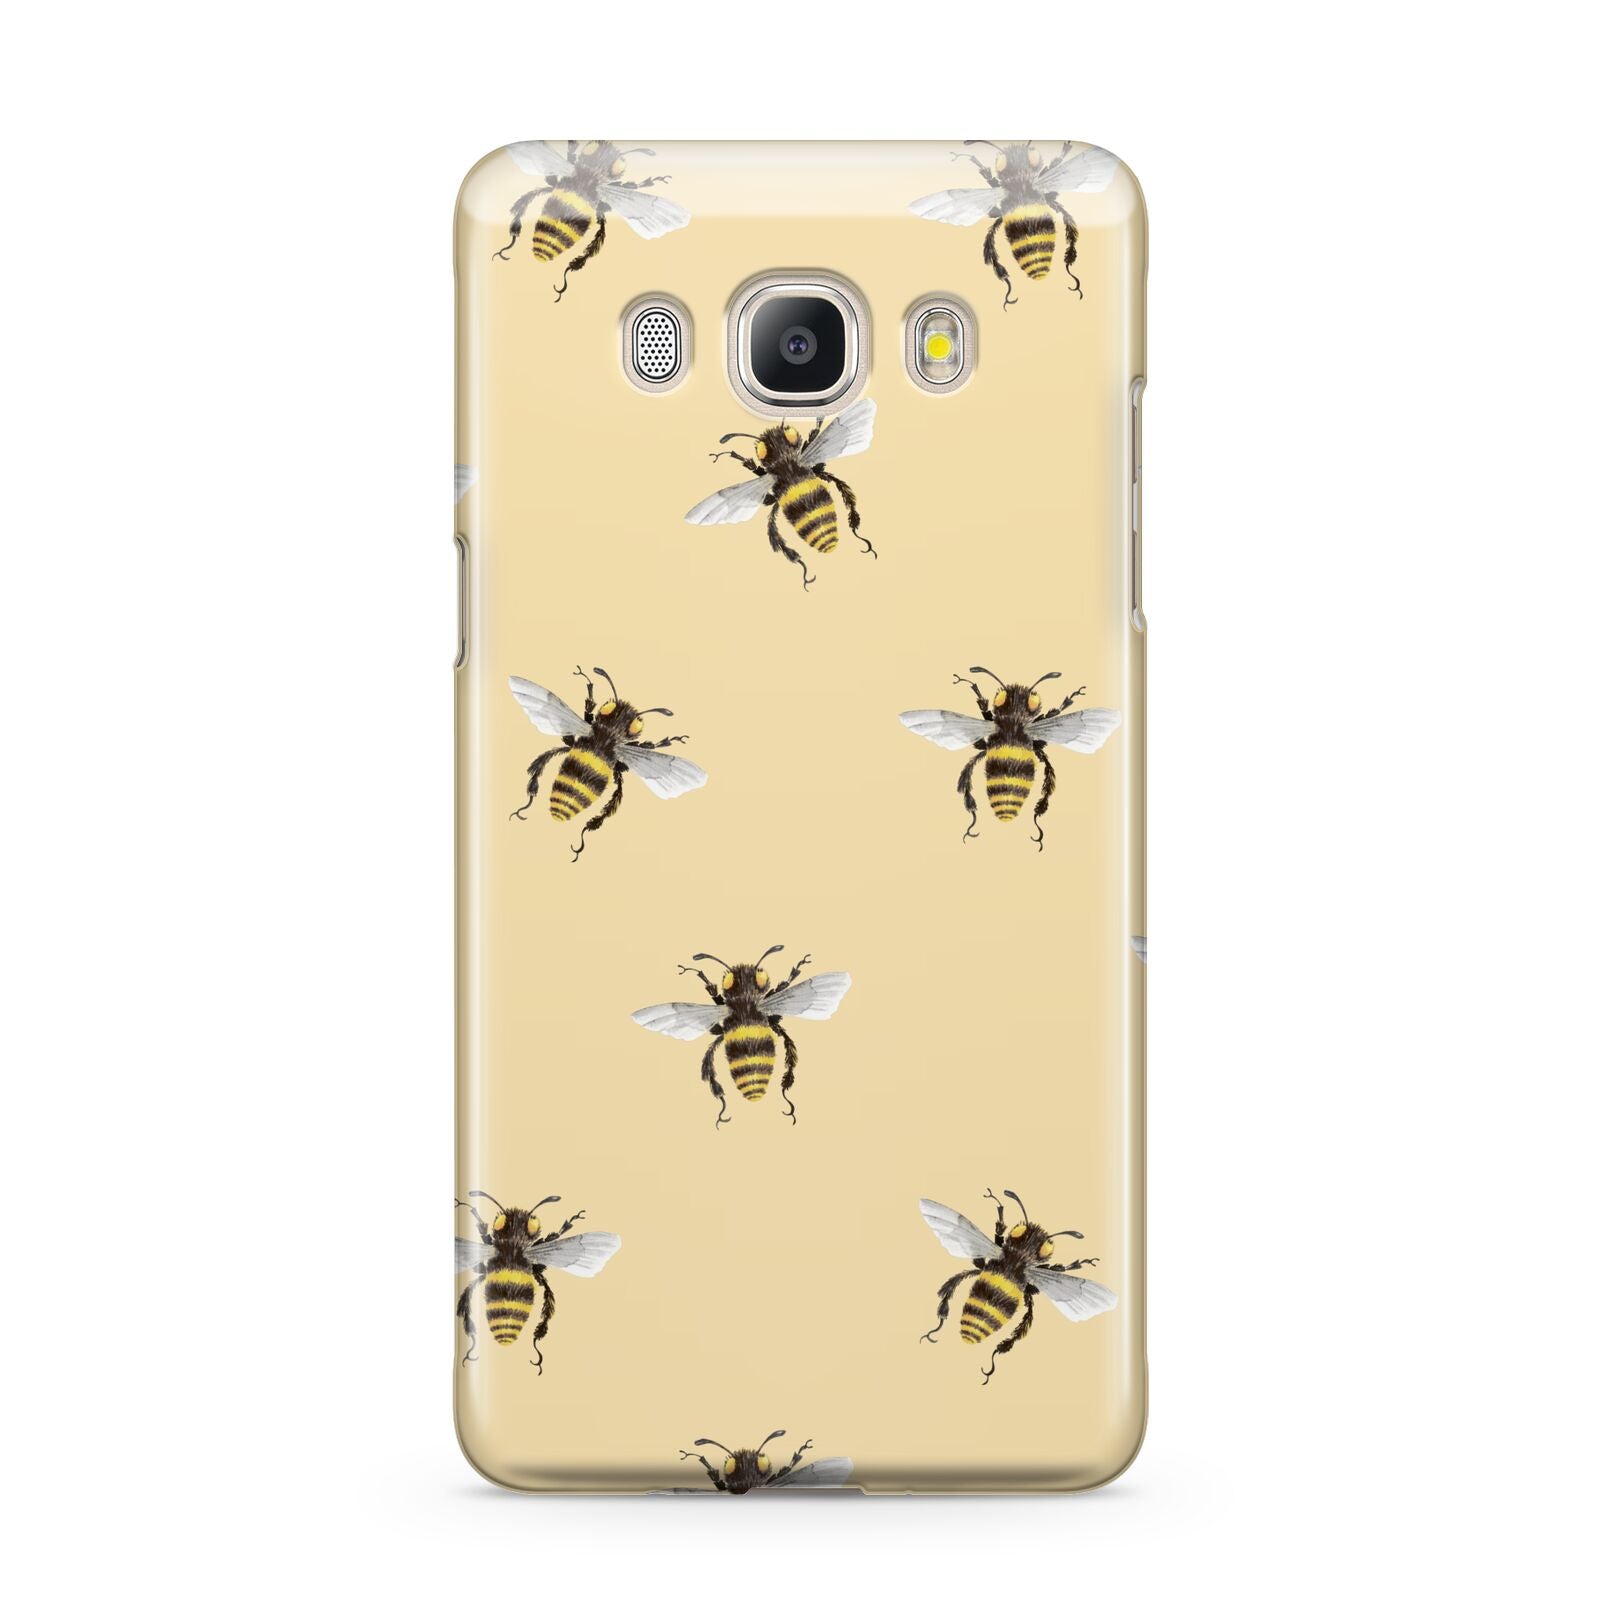 Bee Illustrations Samsung Galaxy J5 2016 Case